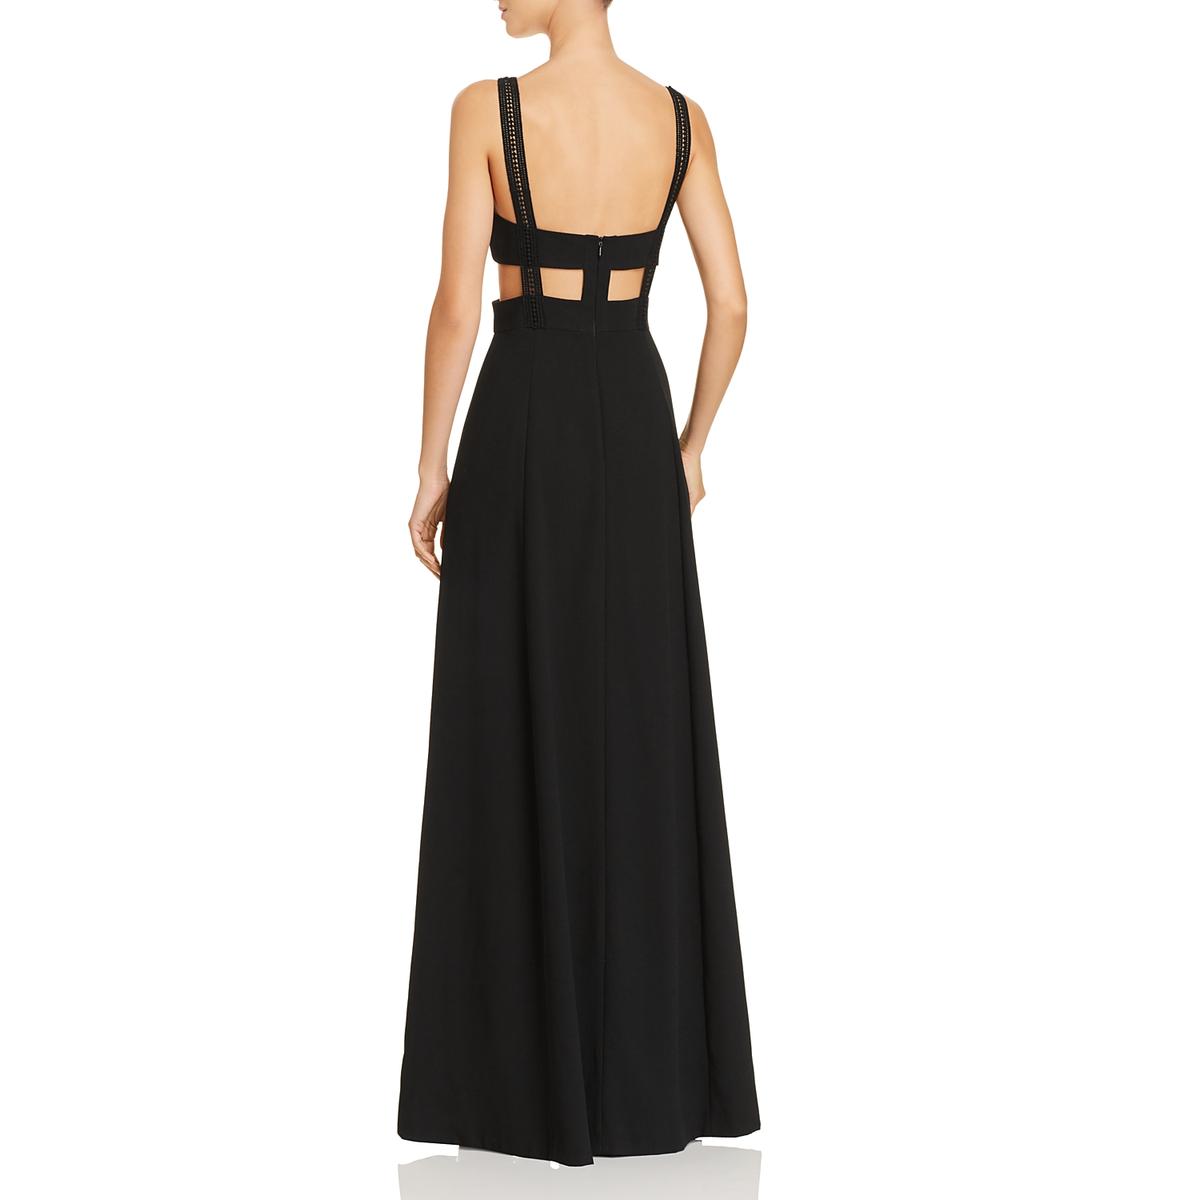 Aidan by Aidan Mattox Womens Black Lace Cut-Out Evening Dress Gown 0